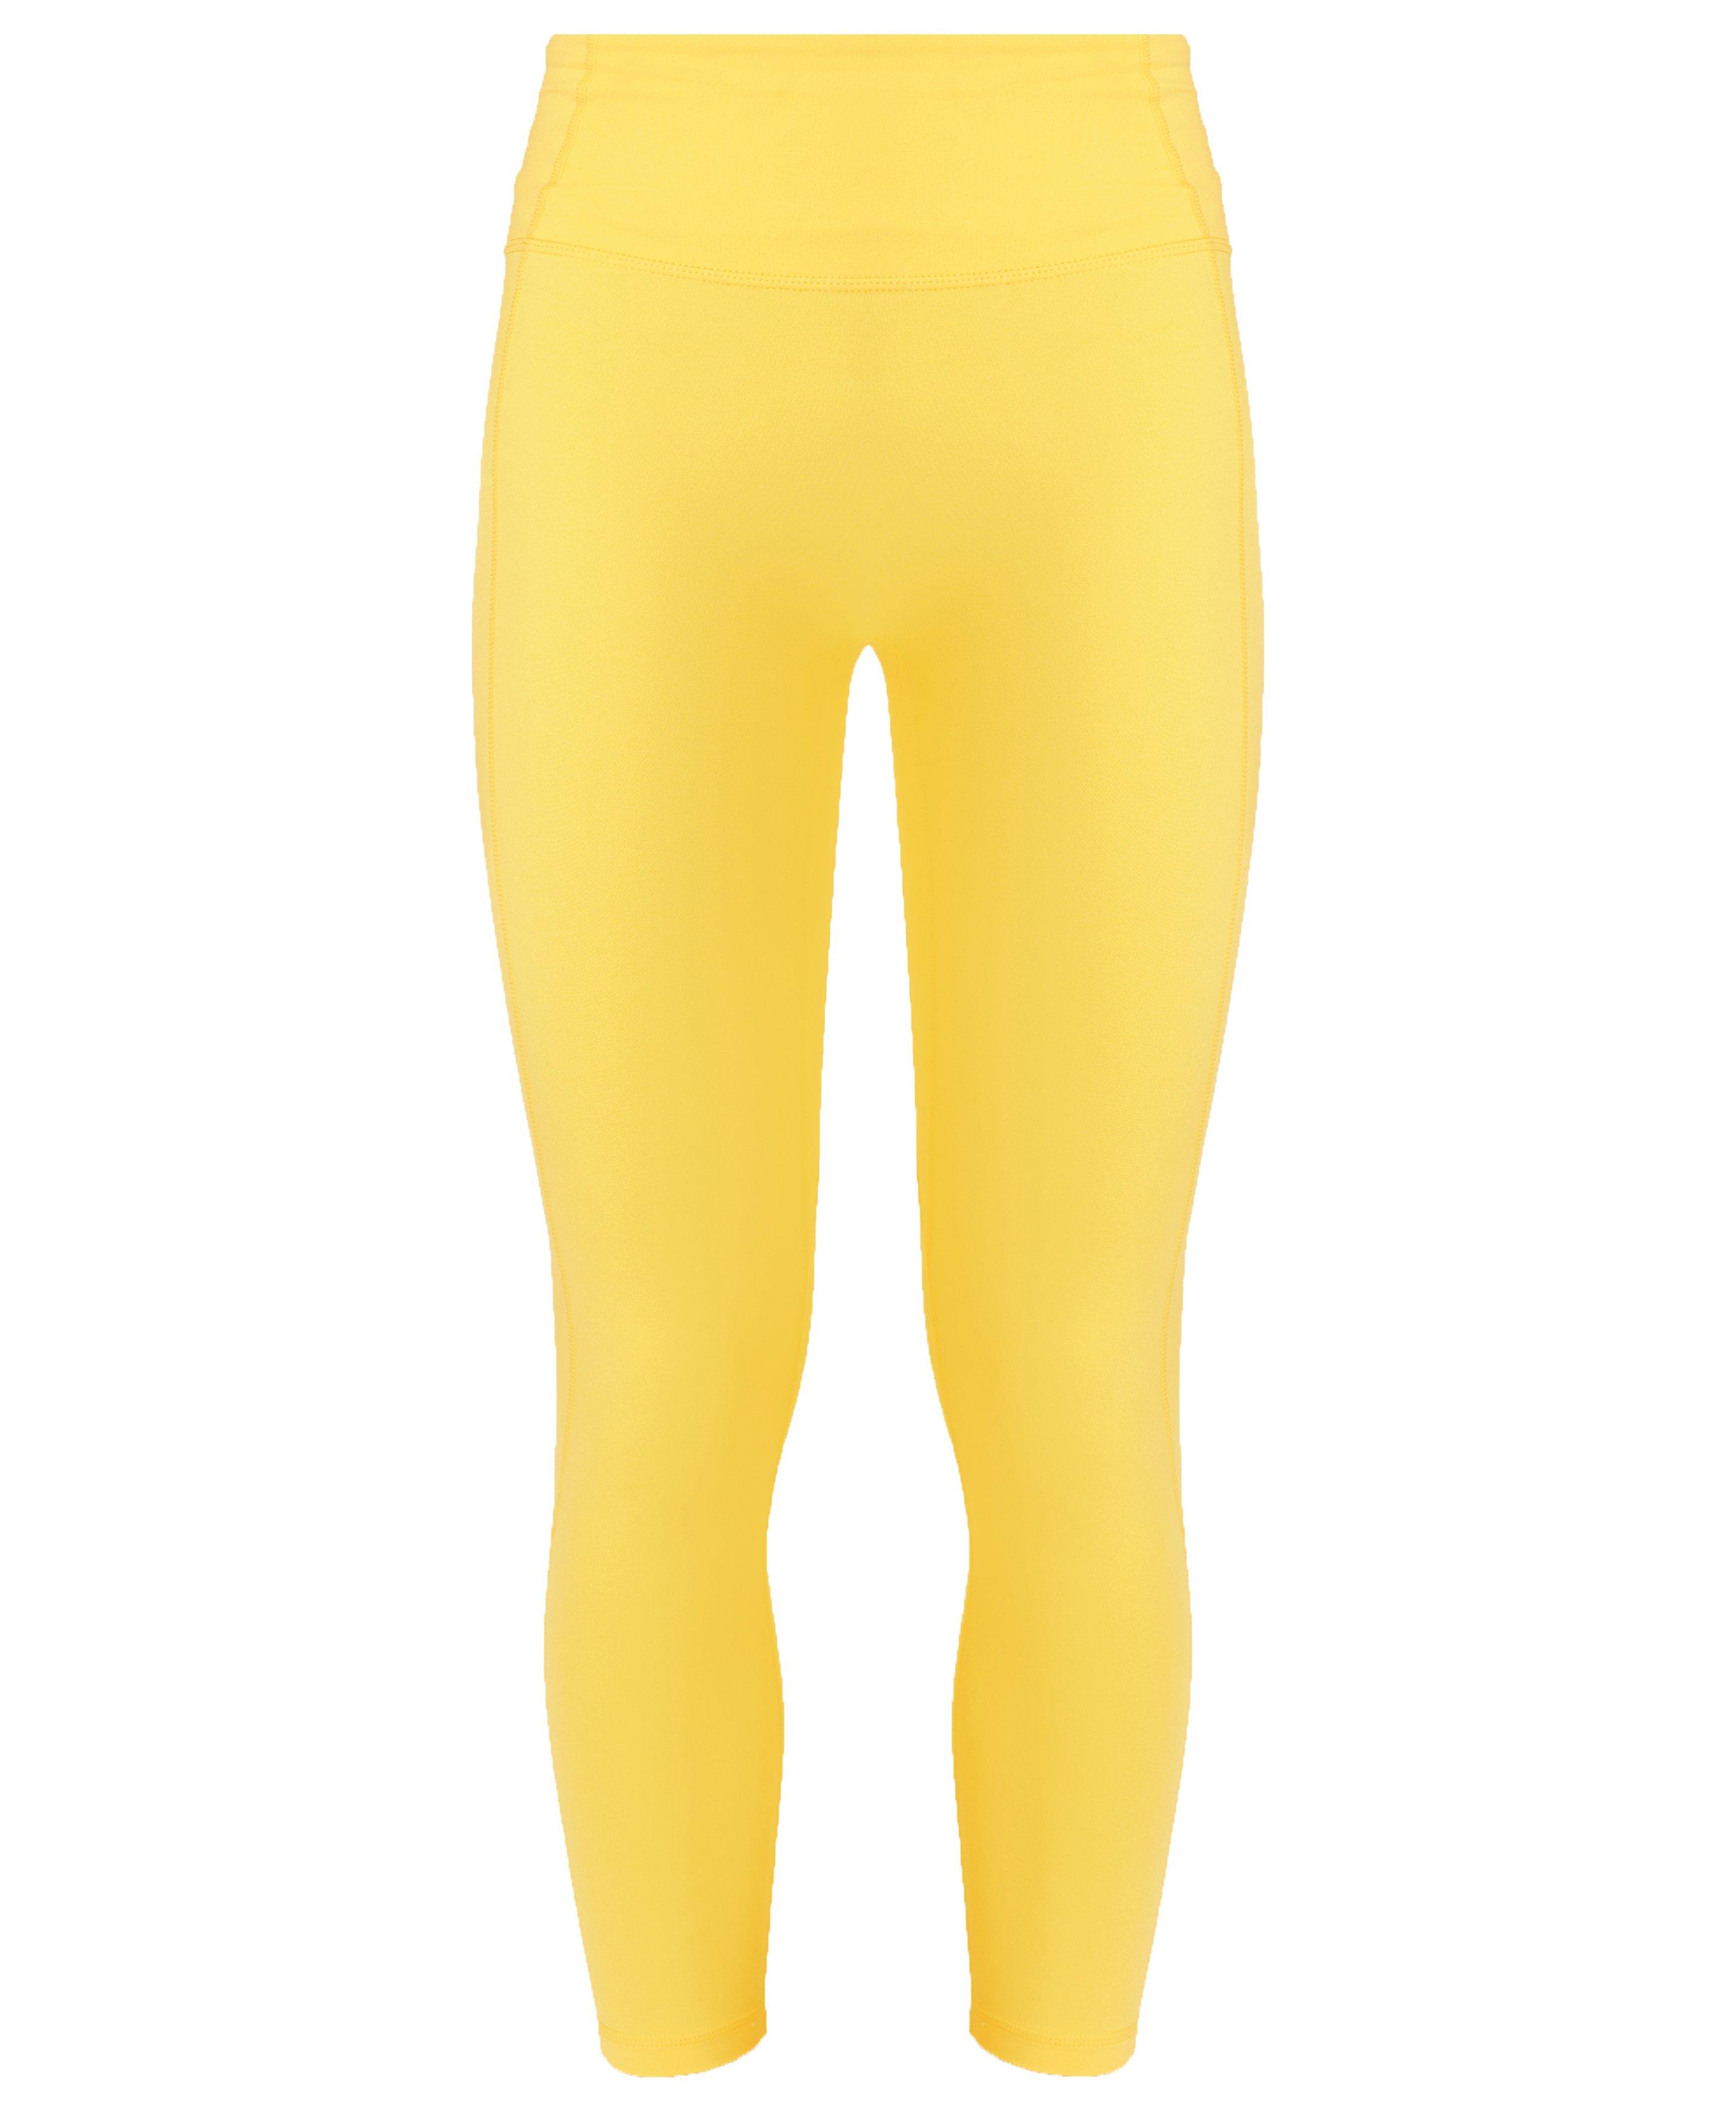 Super Soft 7/8 Leggings Colour Theory - Cheerful Yellow, Women's Leggings